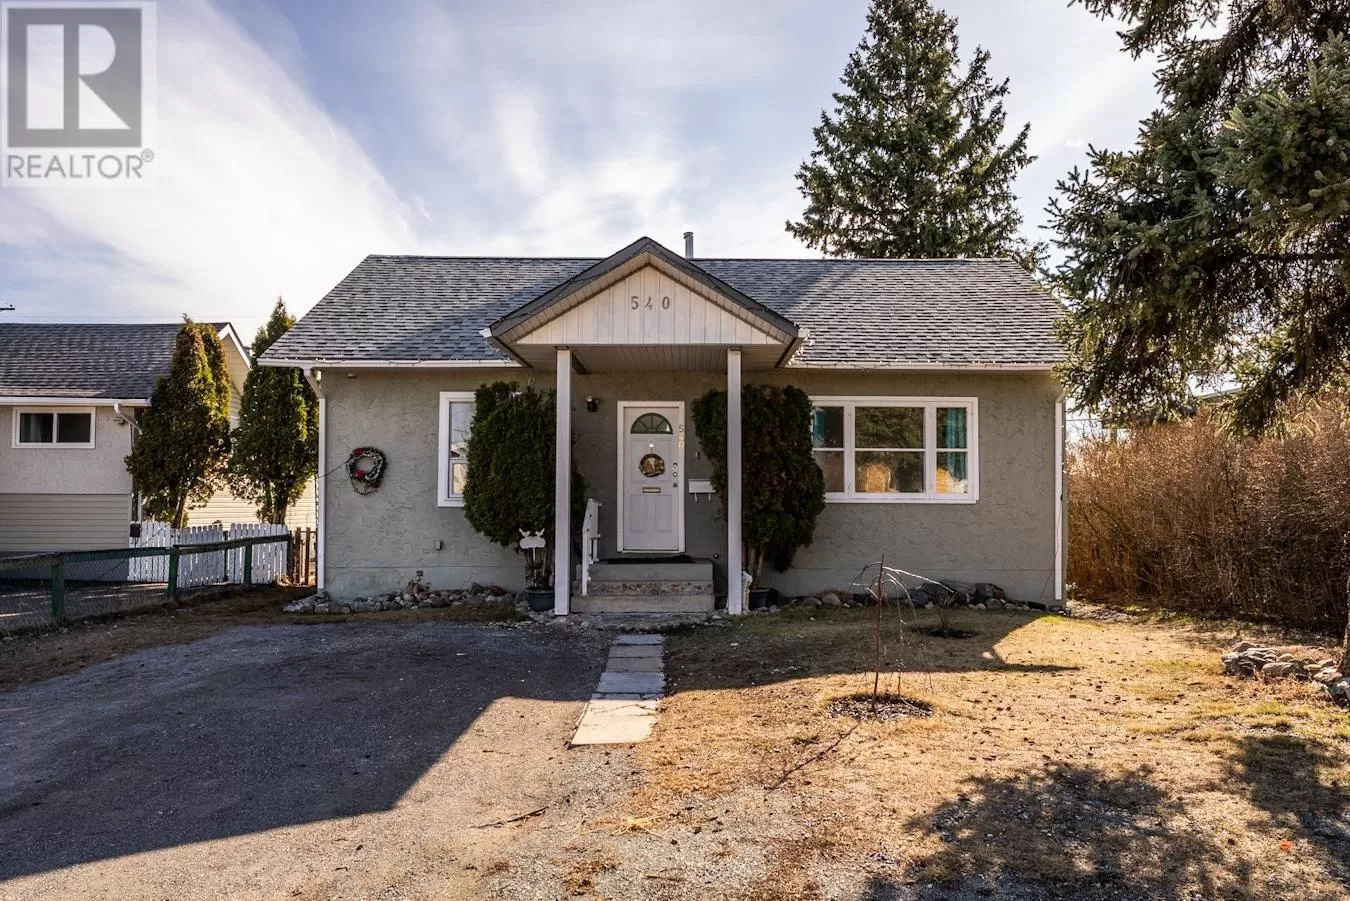 House for rent: 540 Harper Street, Prince George, British Columbia V2M 2W5